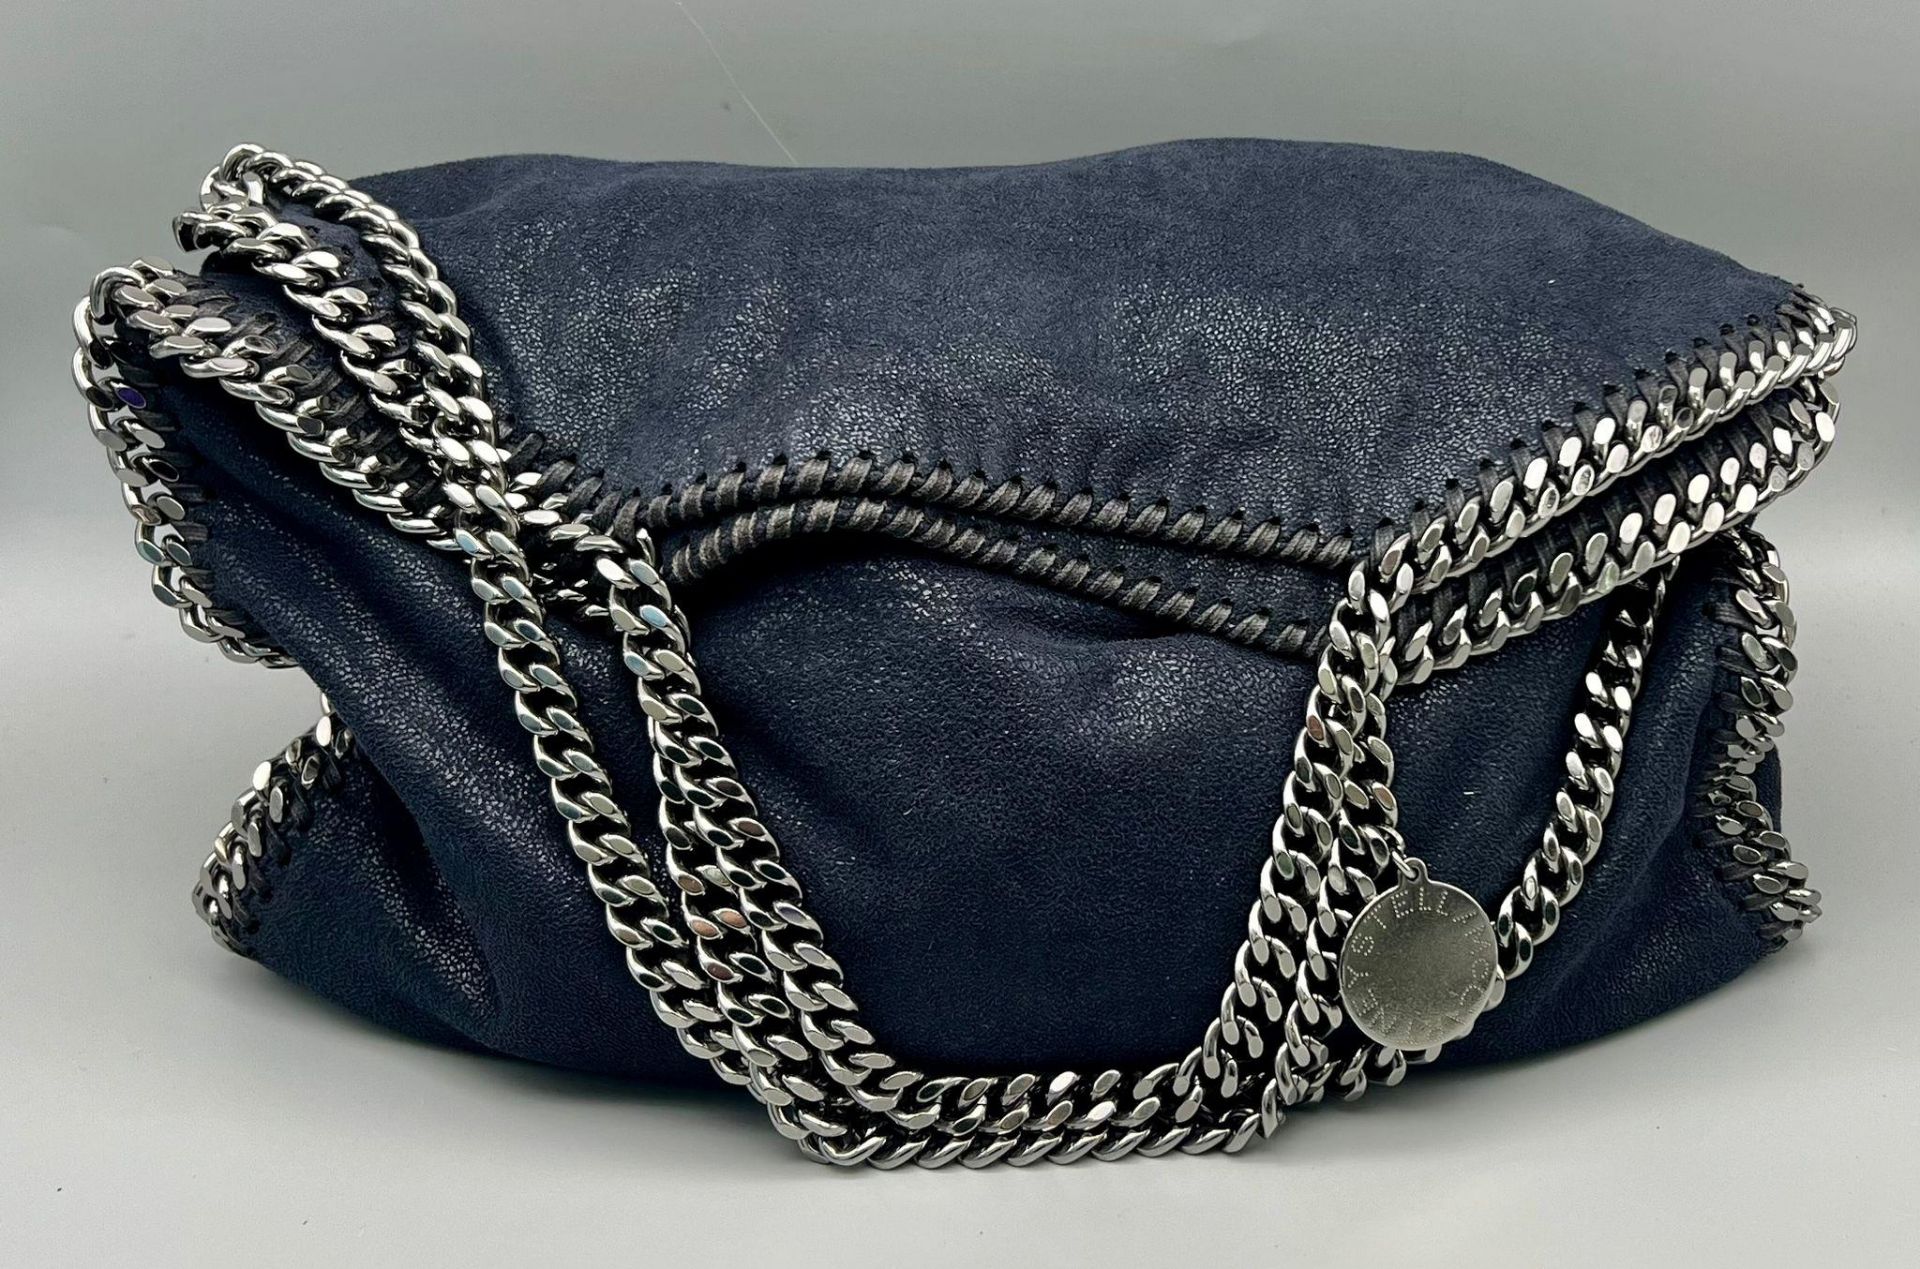 A Stella McCartney Falabella Shoulder/Tote Bag. Navy pvc with silver-tone heavy hardware. Monogram